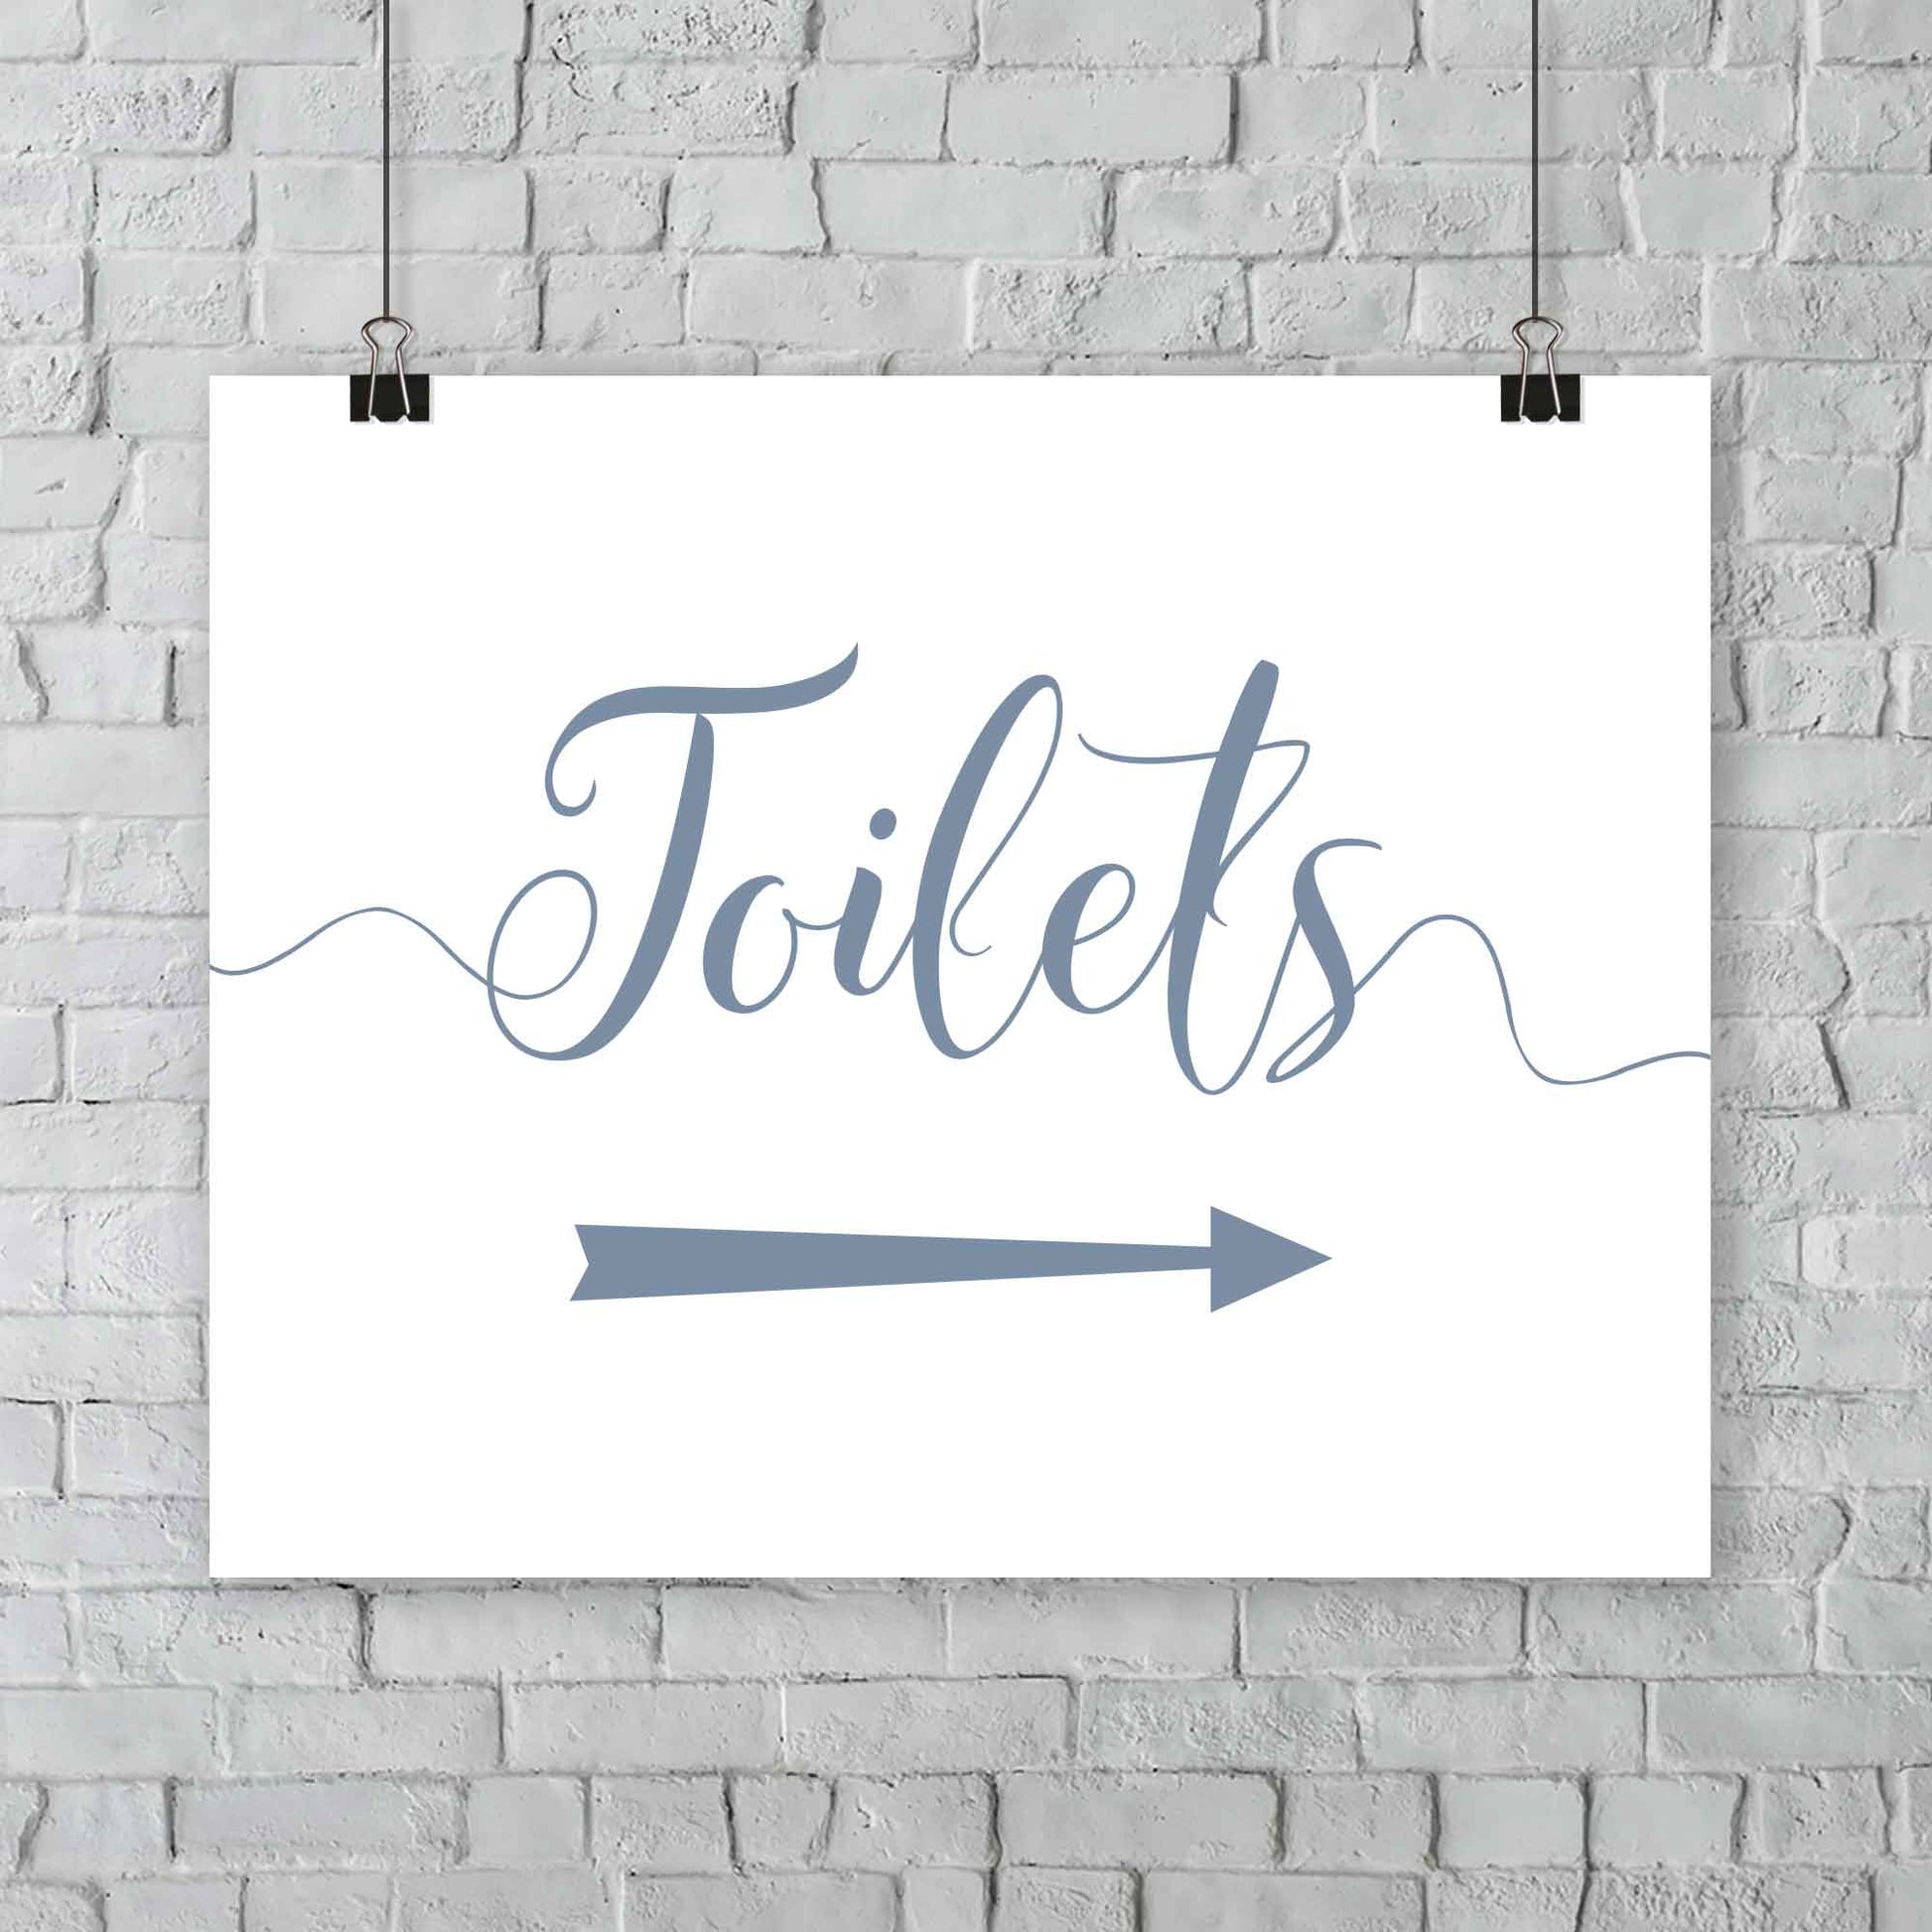 printed misty blue wedding toilets arrow signage on a wall